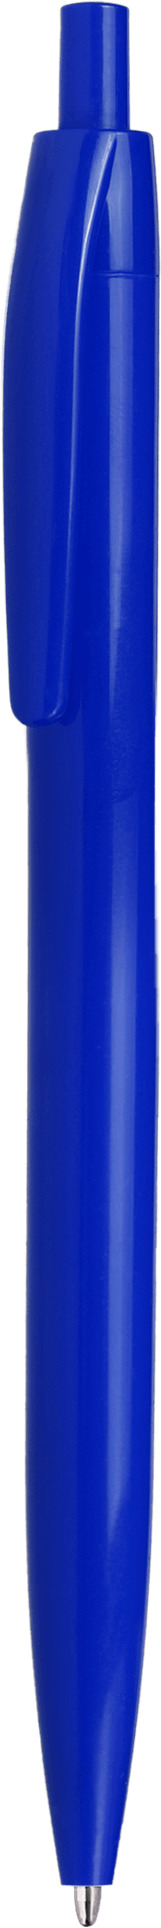 Ручка DAROM, однотонная, синяя